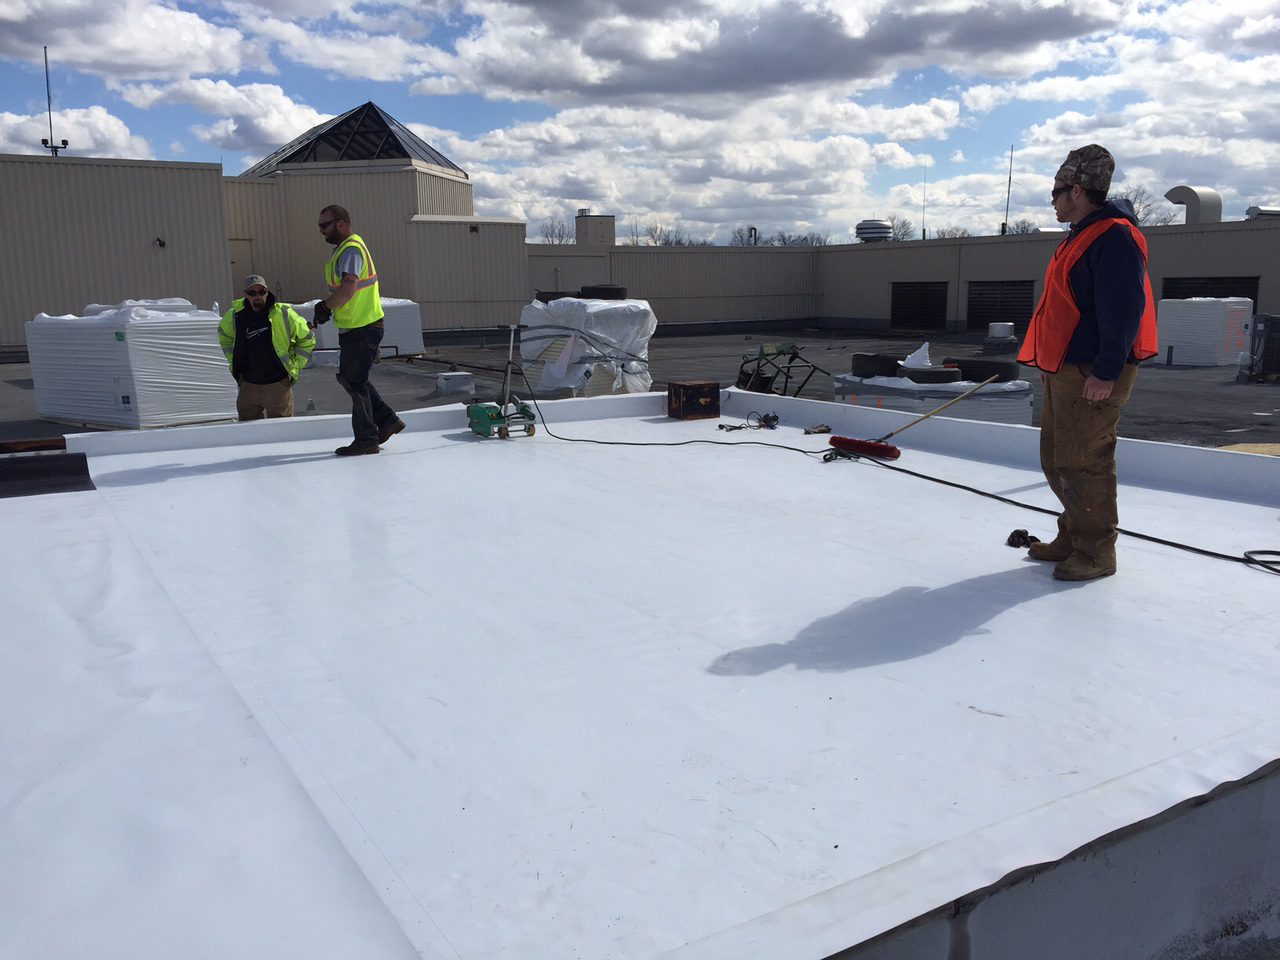 A&e Roof Repairs Queens